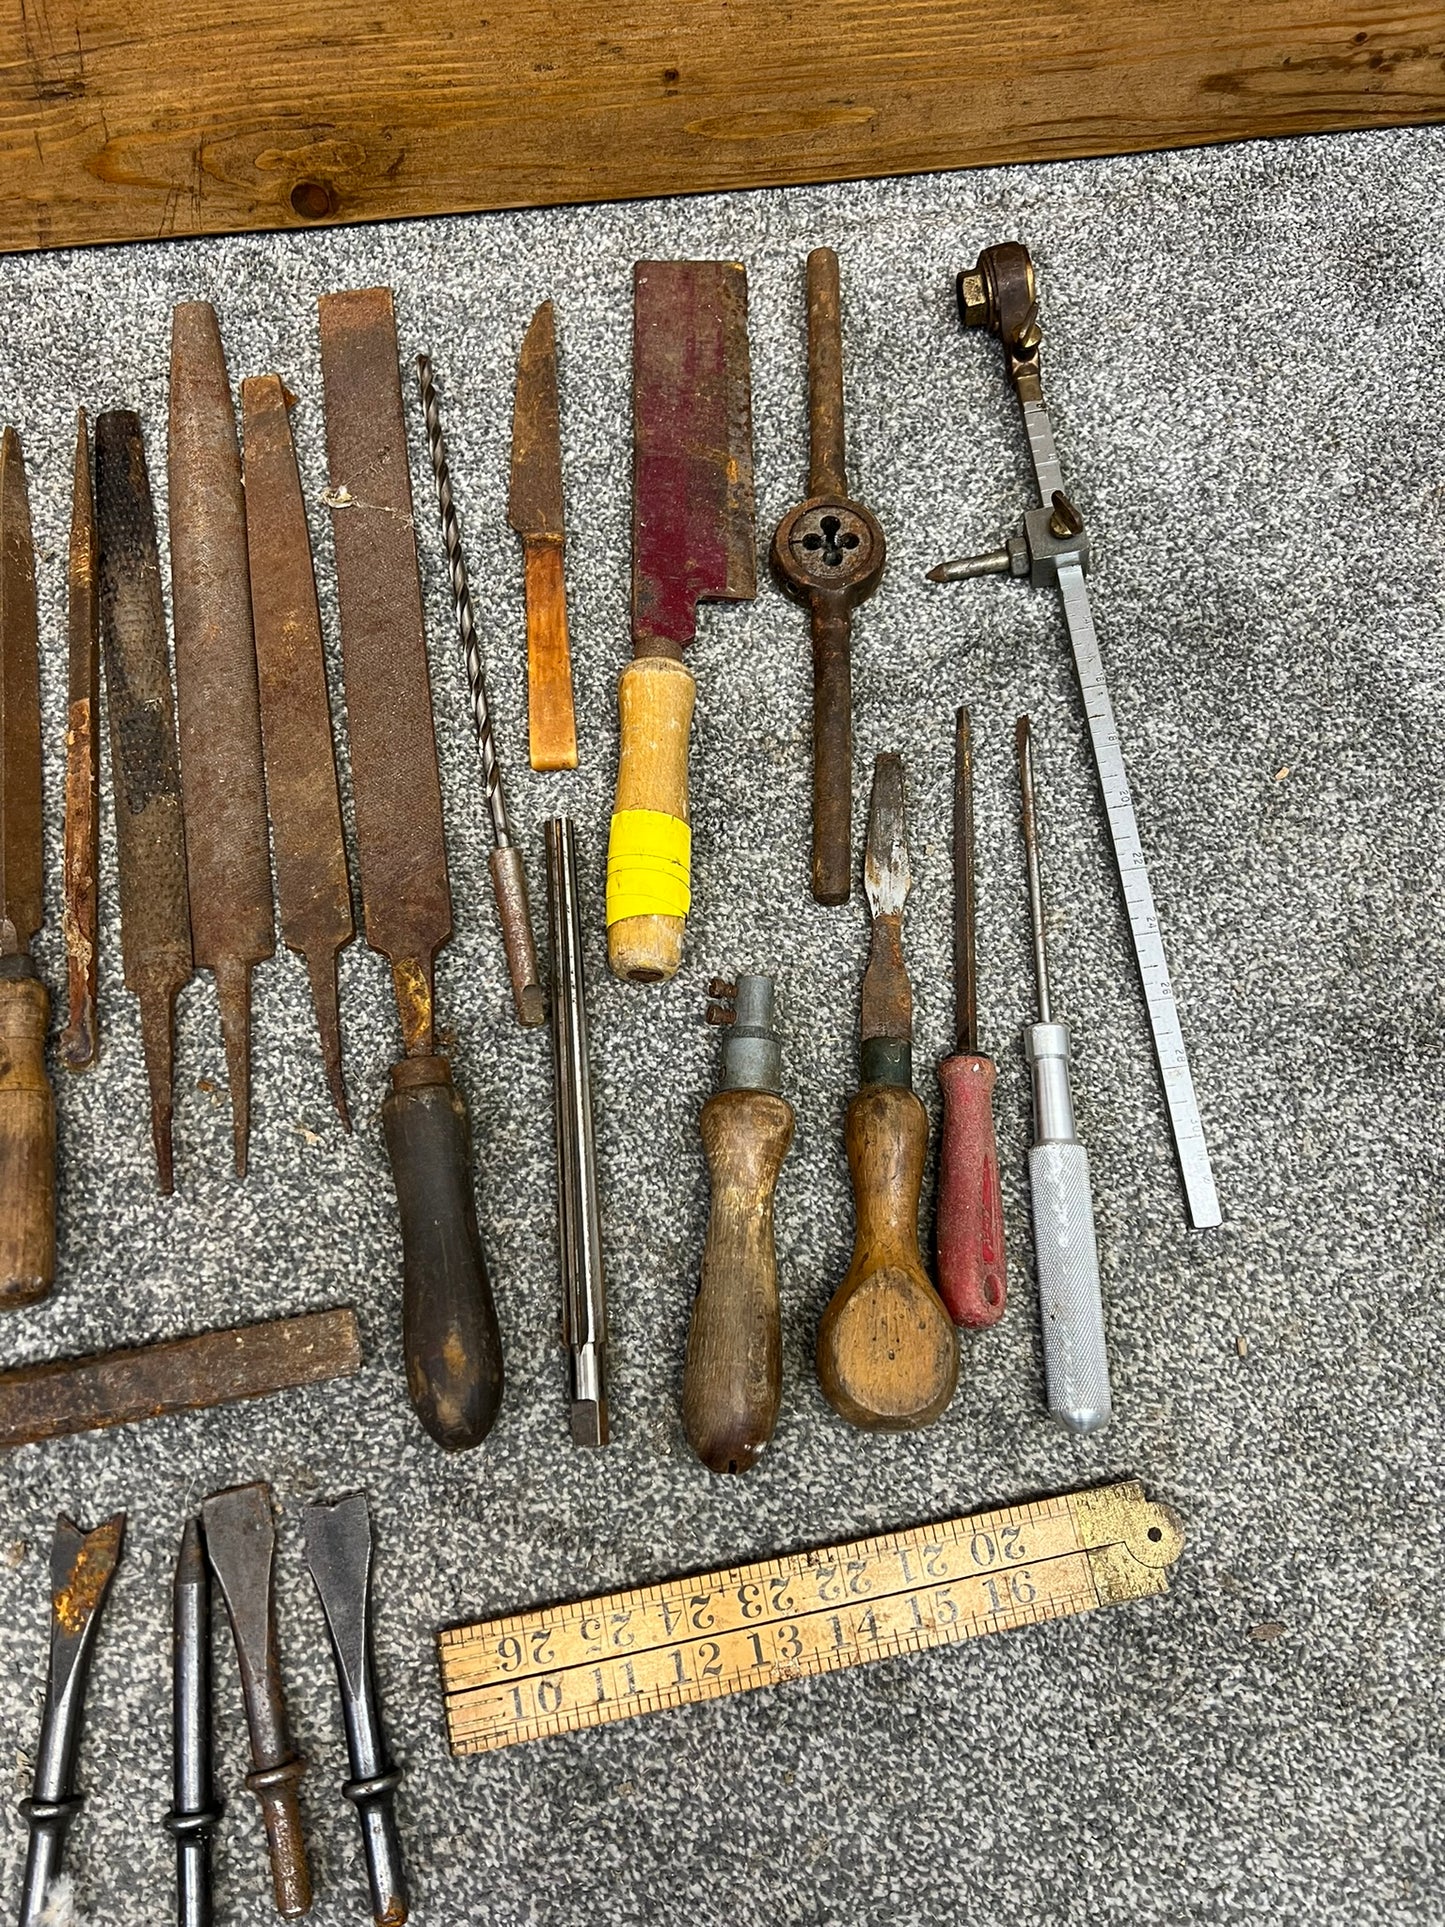 Job Lot of Old Garage Workshop Tools Vintage Rustic Patina Pliers Files Etc.